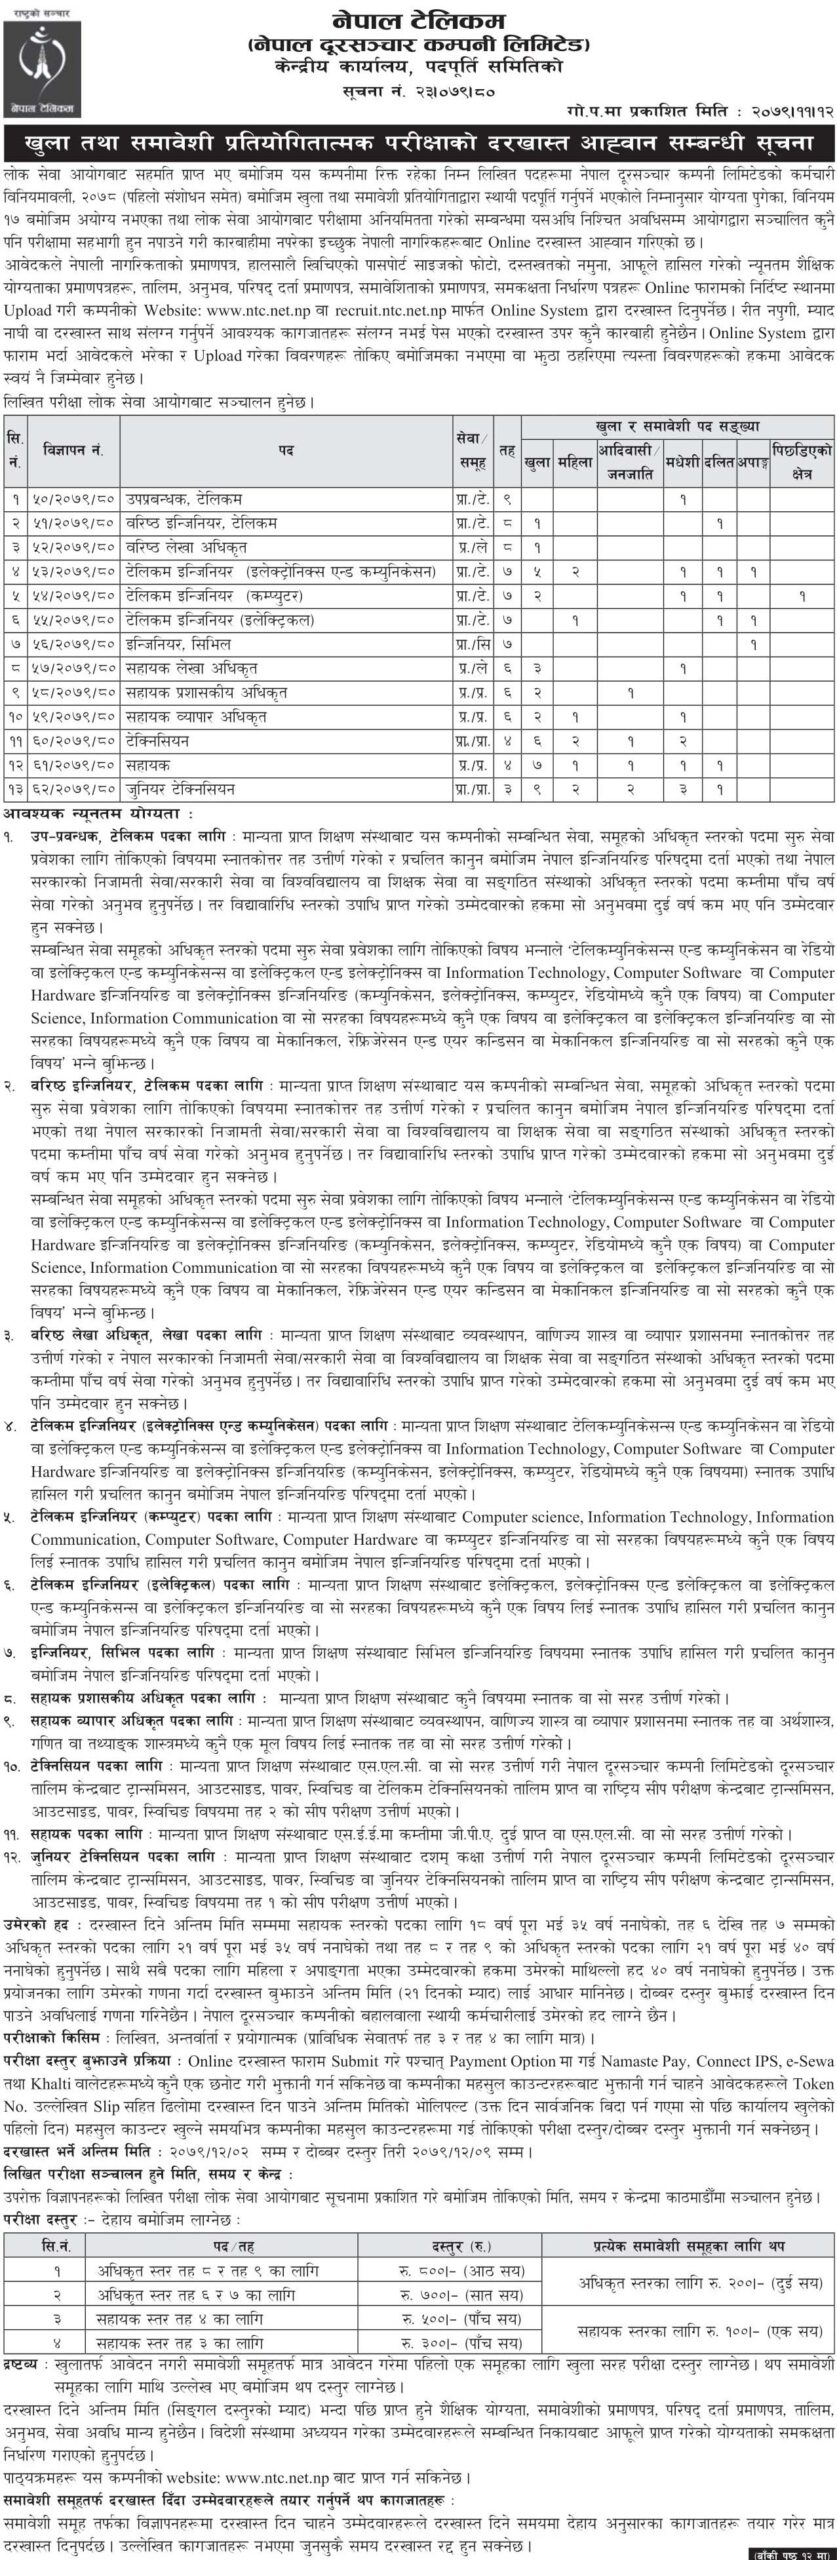 Nepal Telecom has opened Job Vacancy 2079